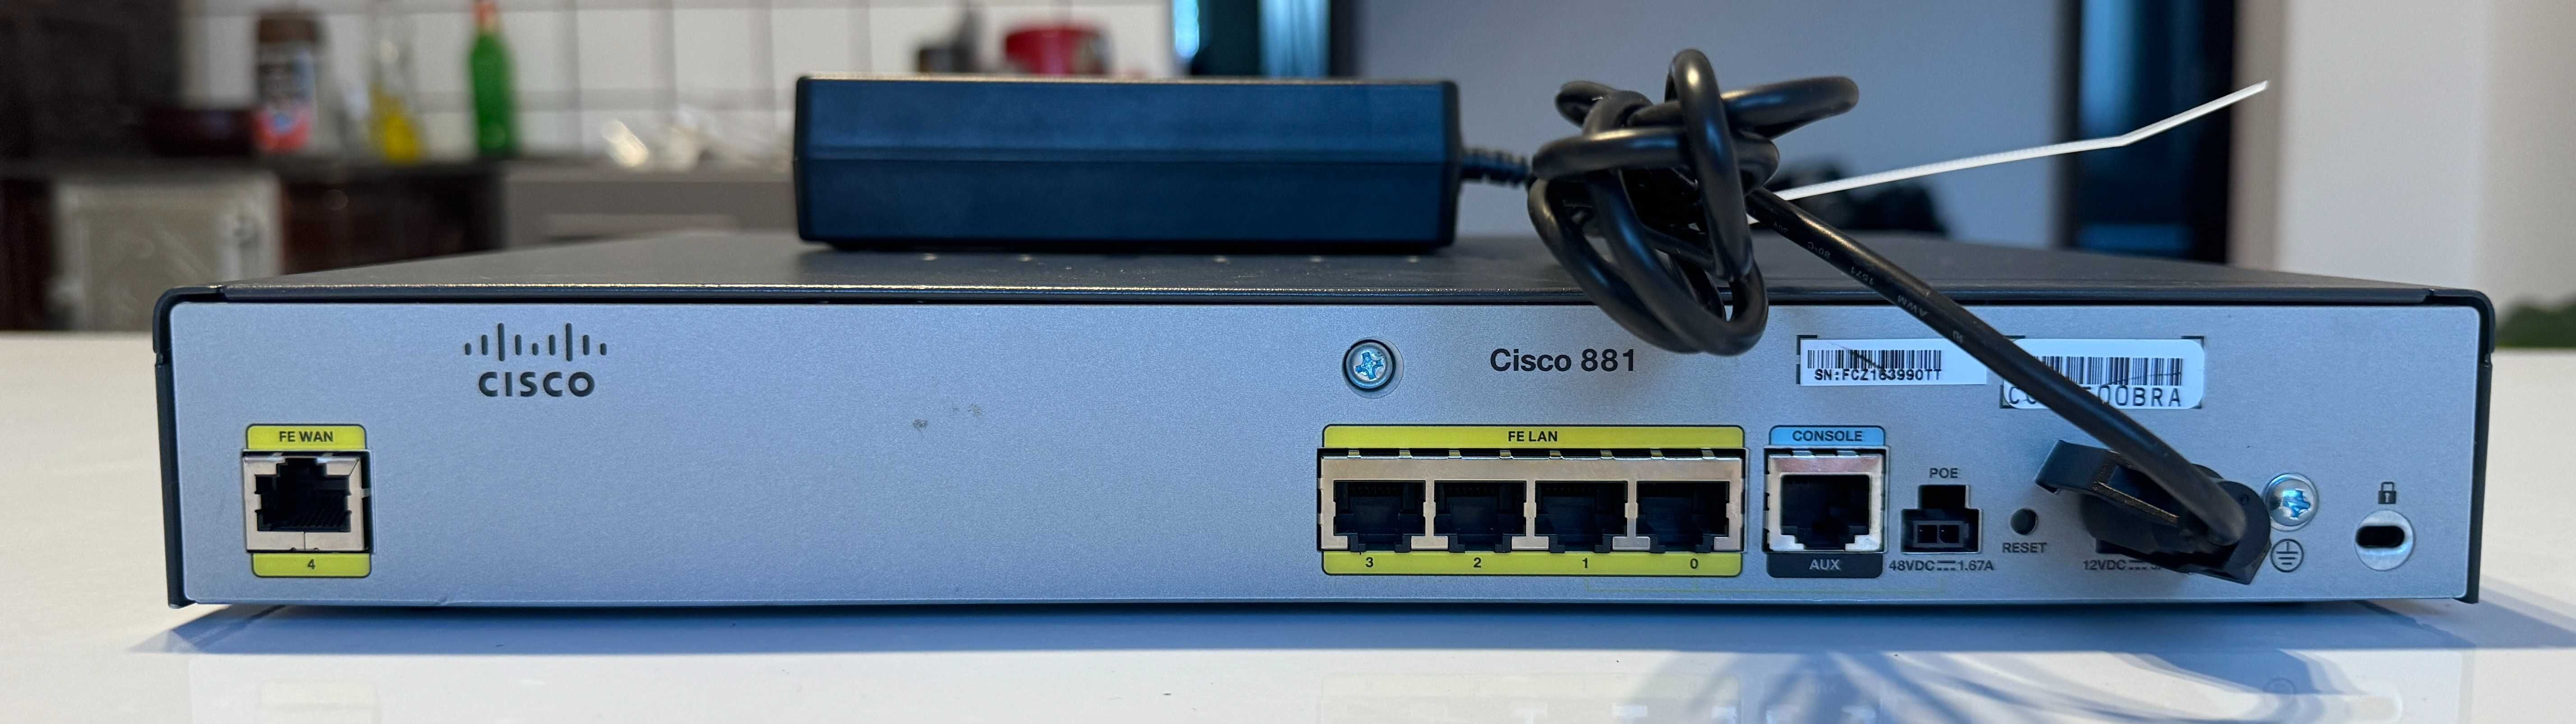 Cisco Series 881 Series